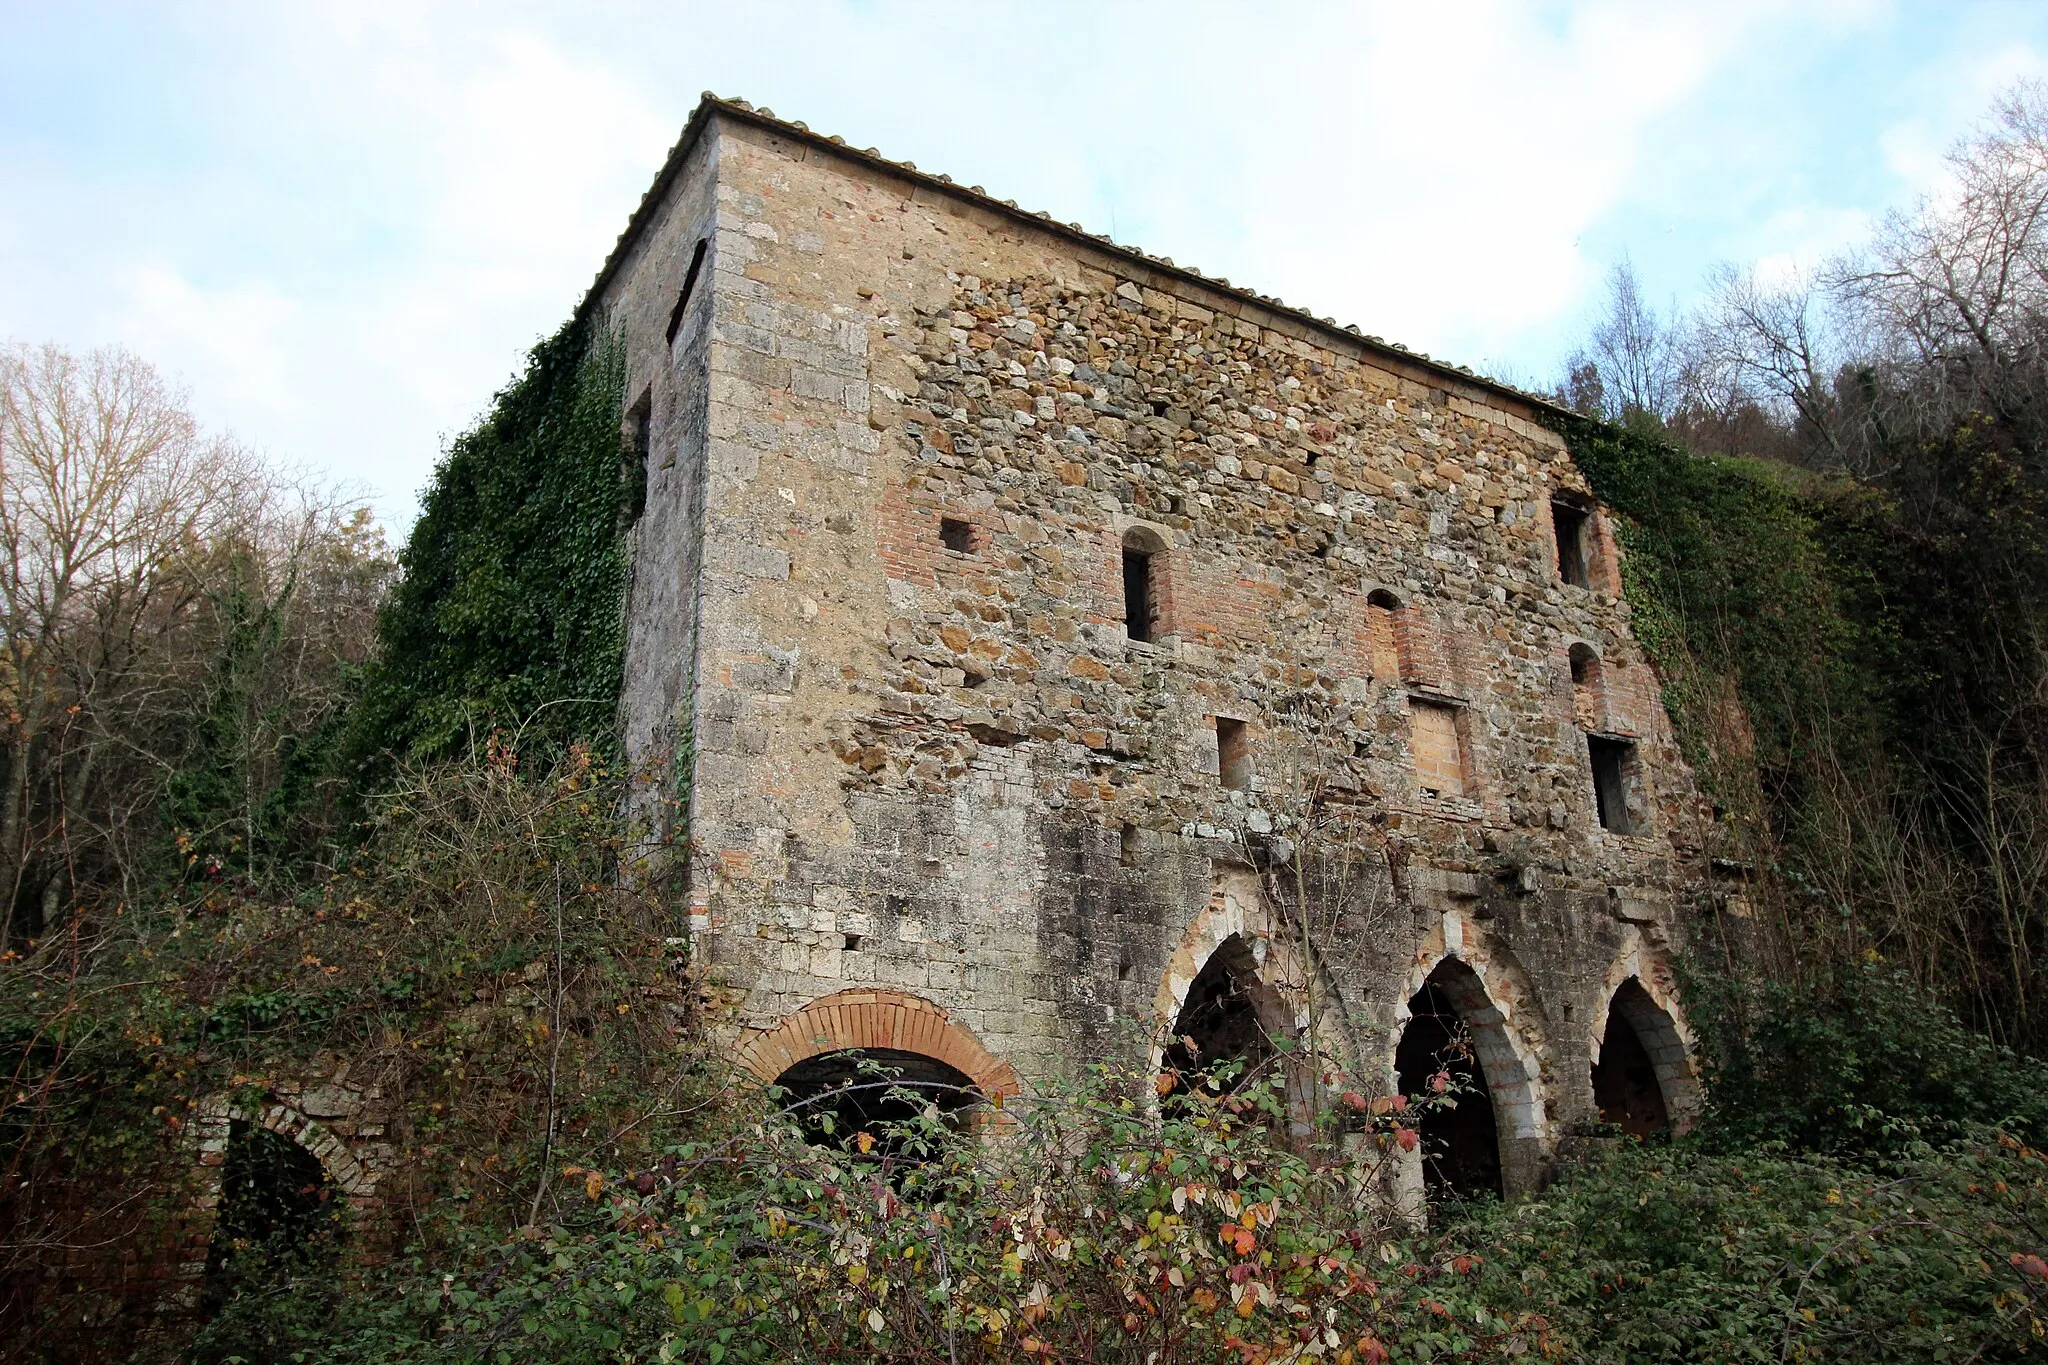 Photo showing: Hermitage Ruin of the Eremo di Santa Lucia a Rosia, part of Chiusdino, near Rosia (hamlet of Sovicille) near the Rosia River, Montagnola Senese, Province of Siena, Tuscany, Italy